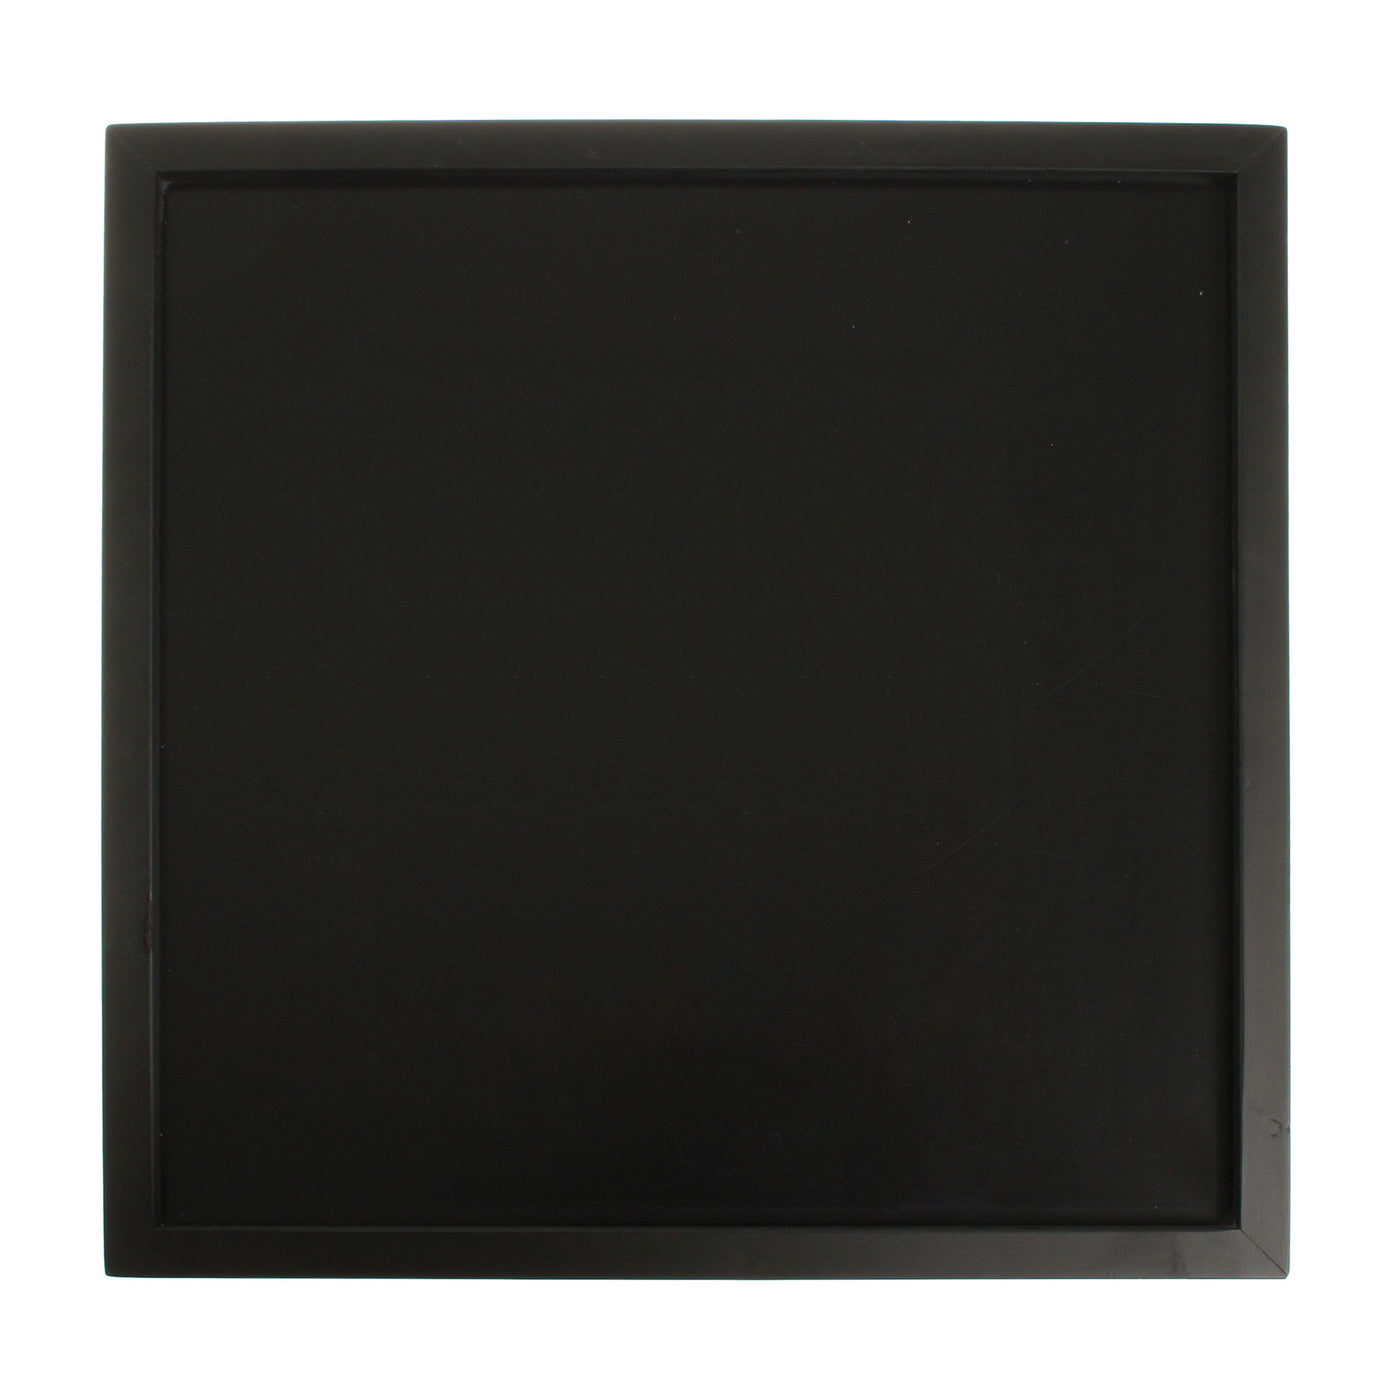 Grimm's Magnettafel Blackboard groß - 50x50cm